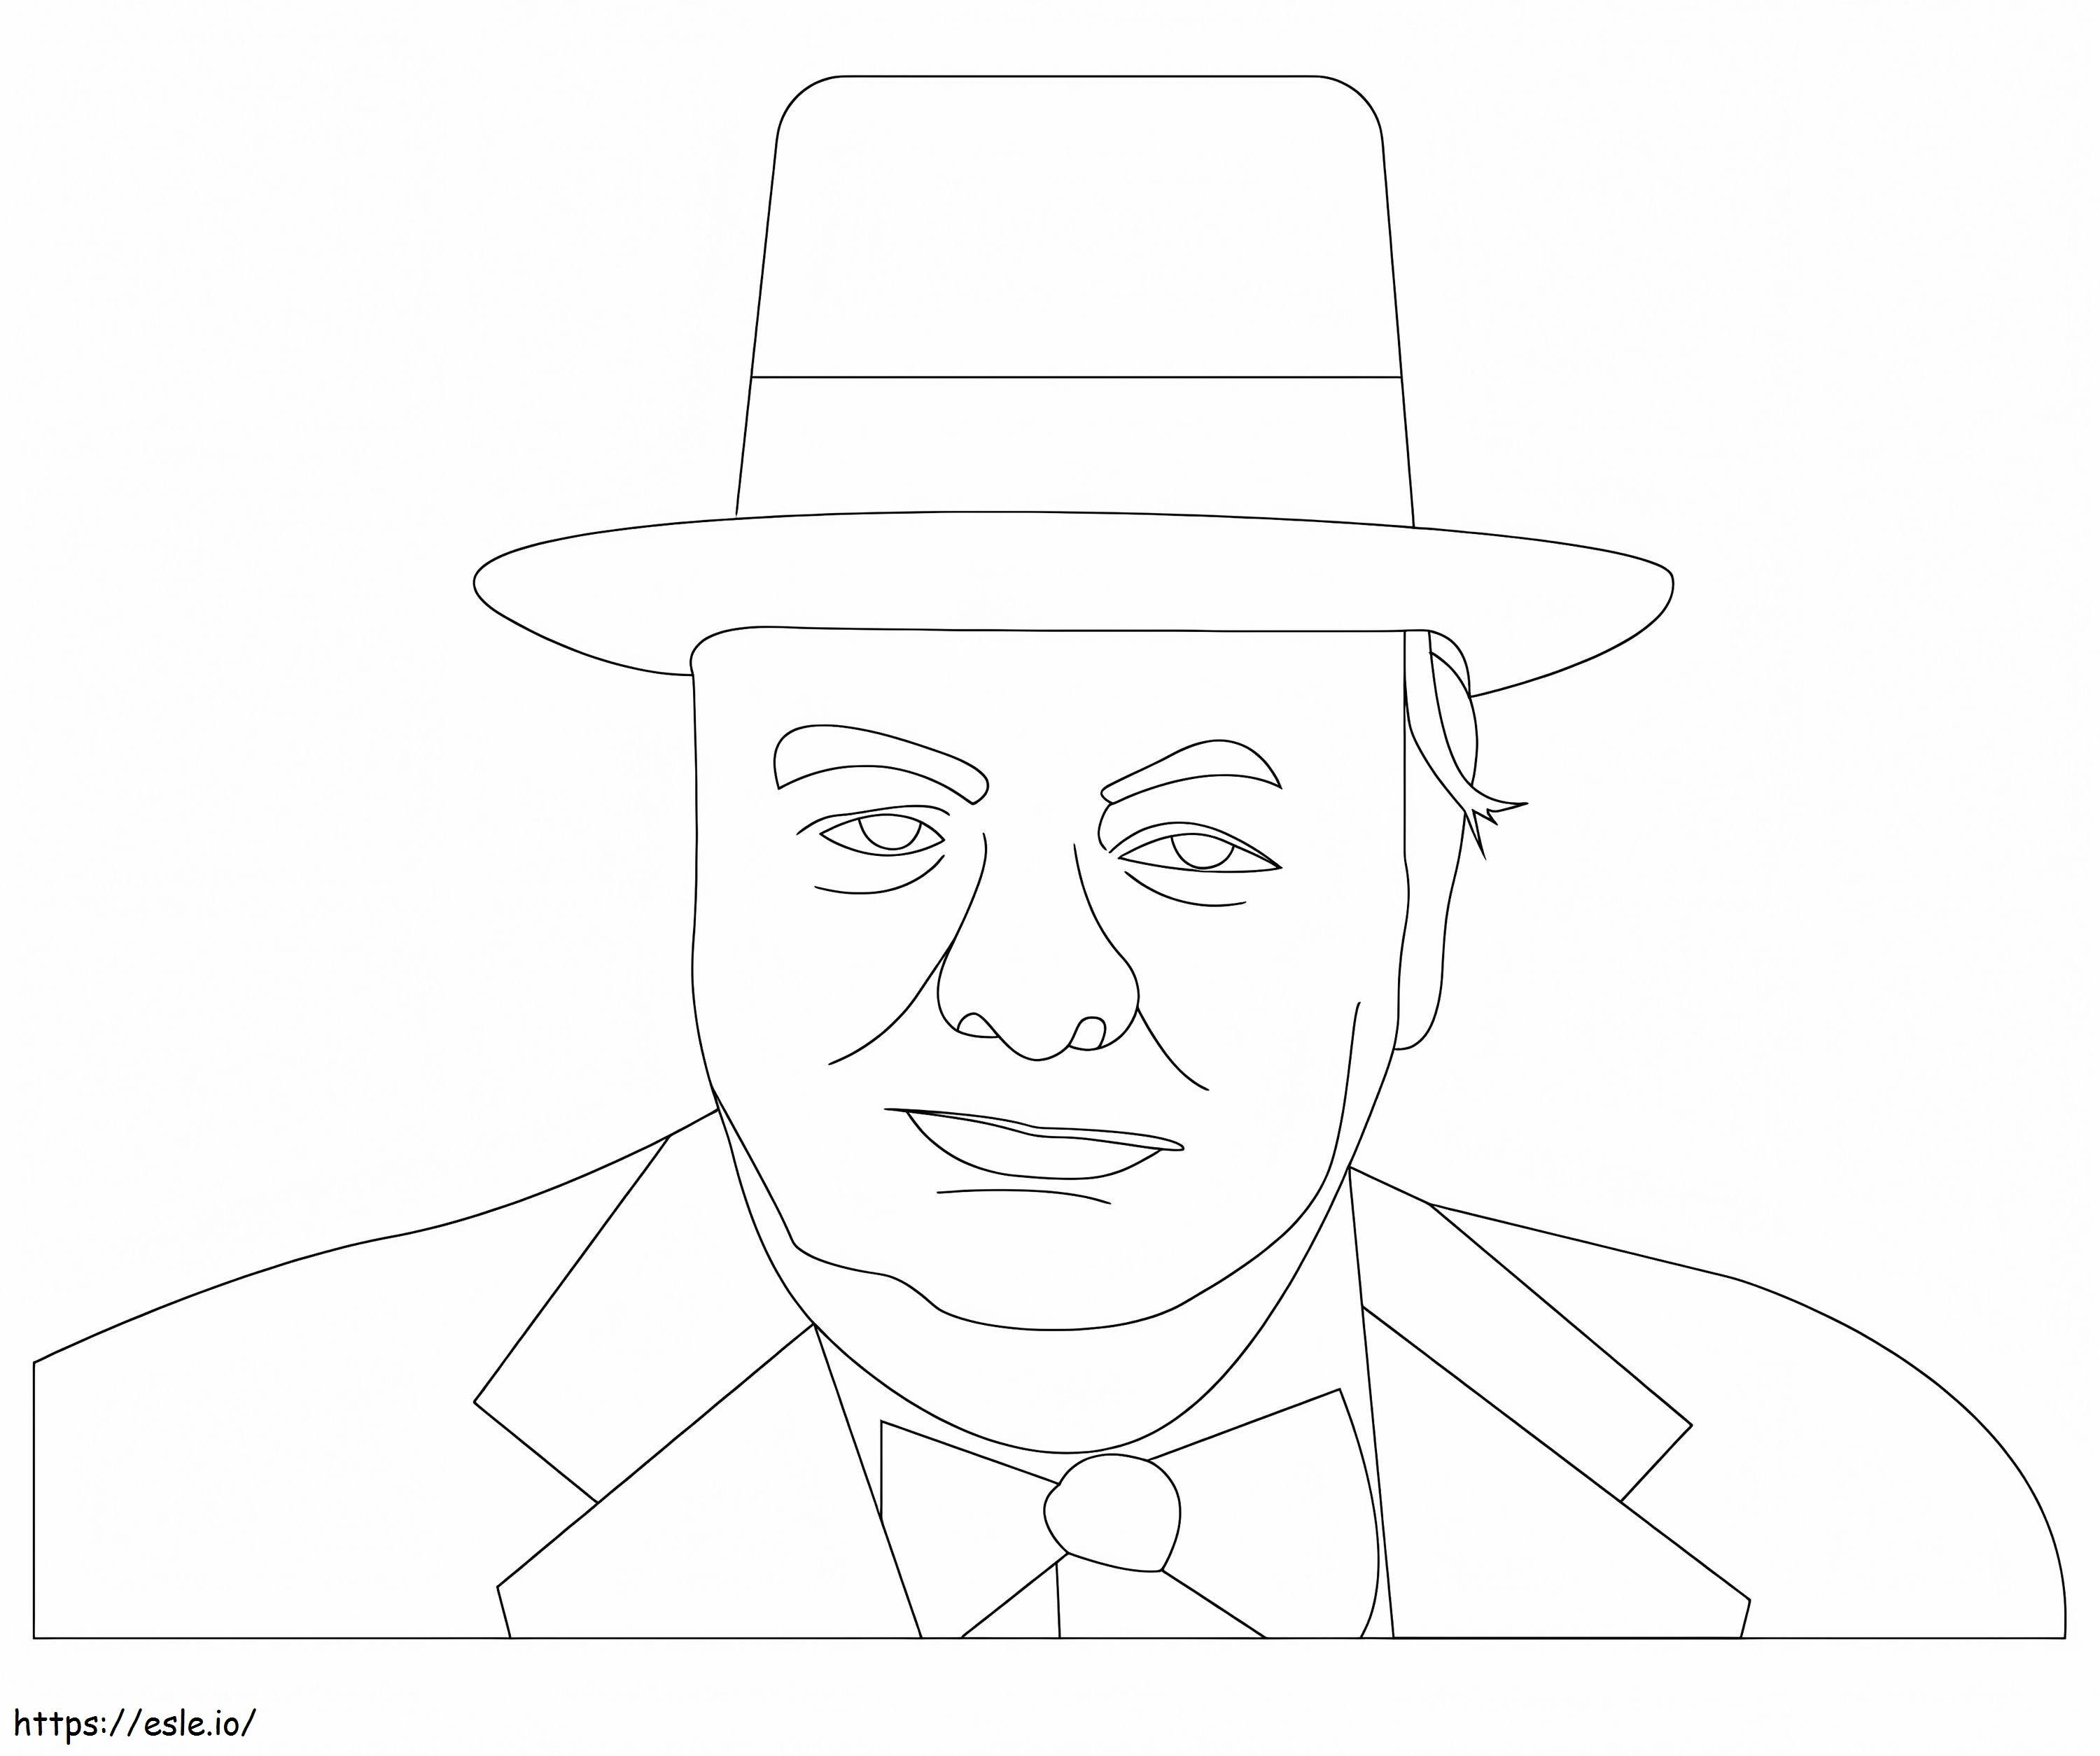 Winston Churchill 1 coloring page